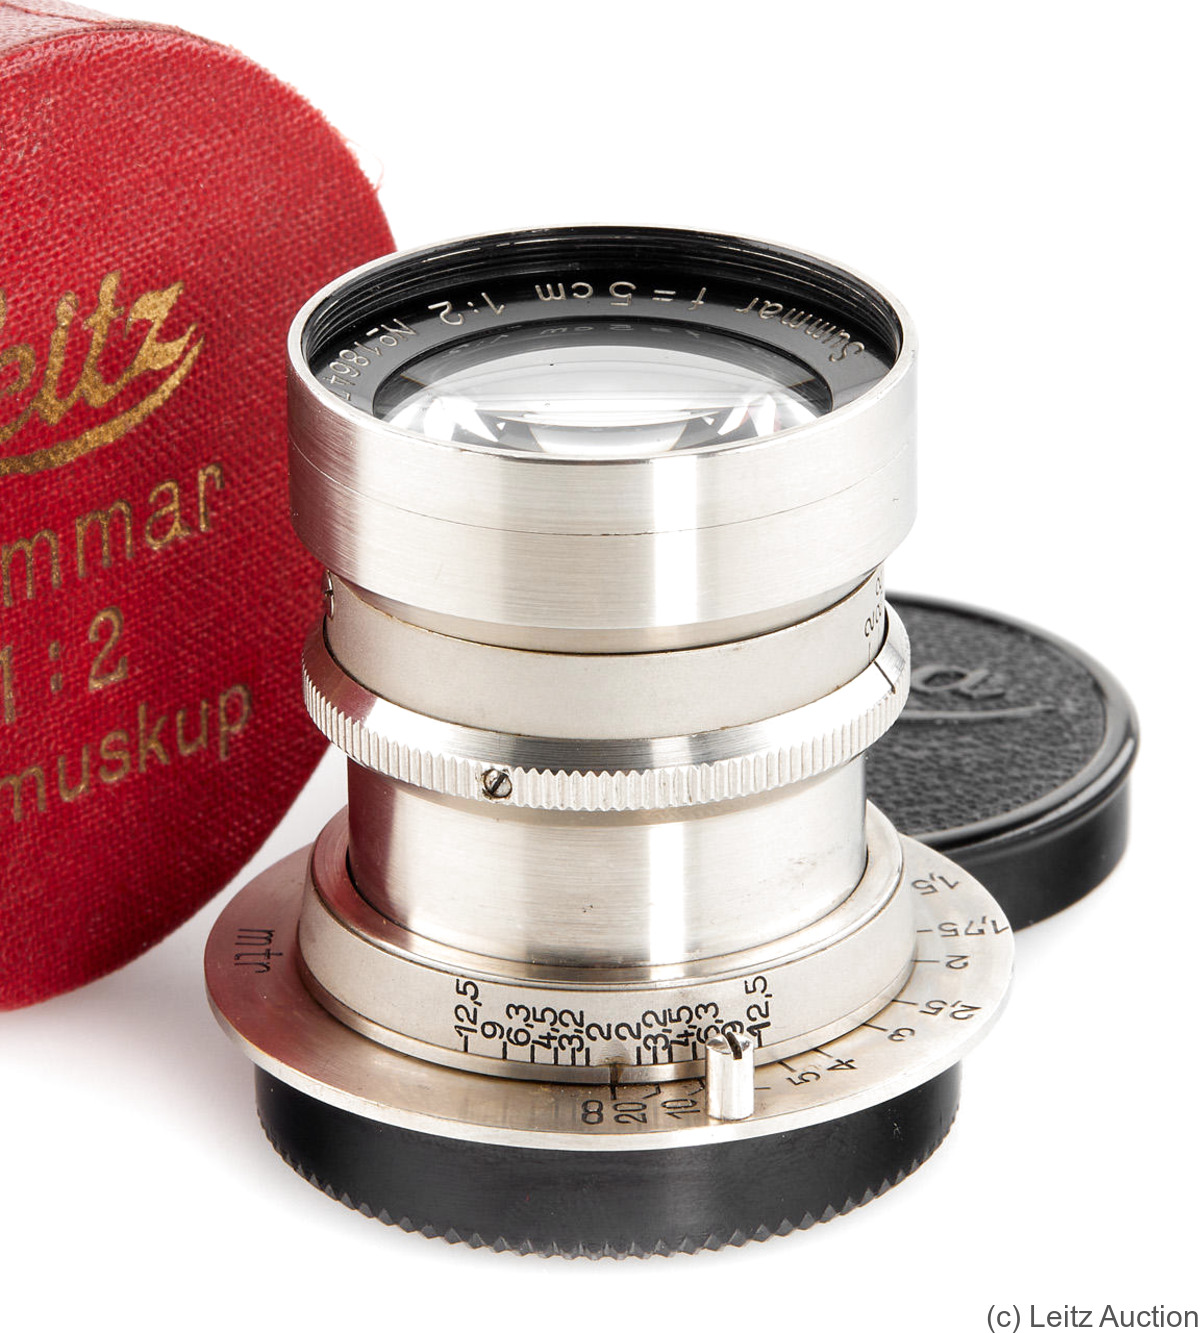 Leitz: 50mm (5cm) f2 Summar (SM, rigid, nickel) Lens Price Guide 